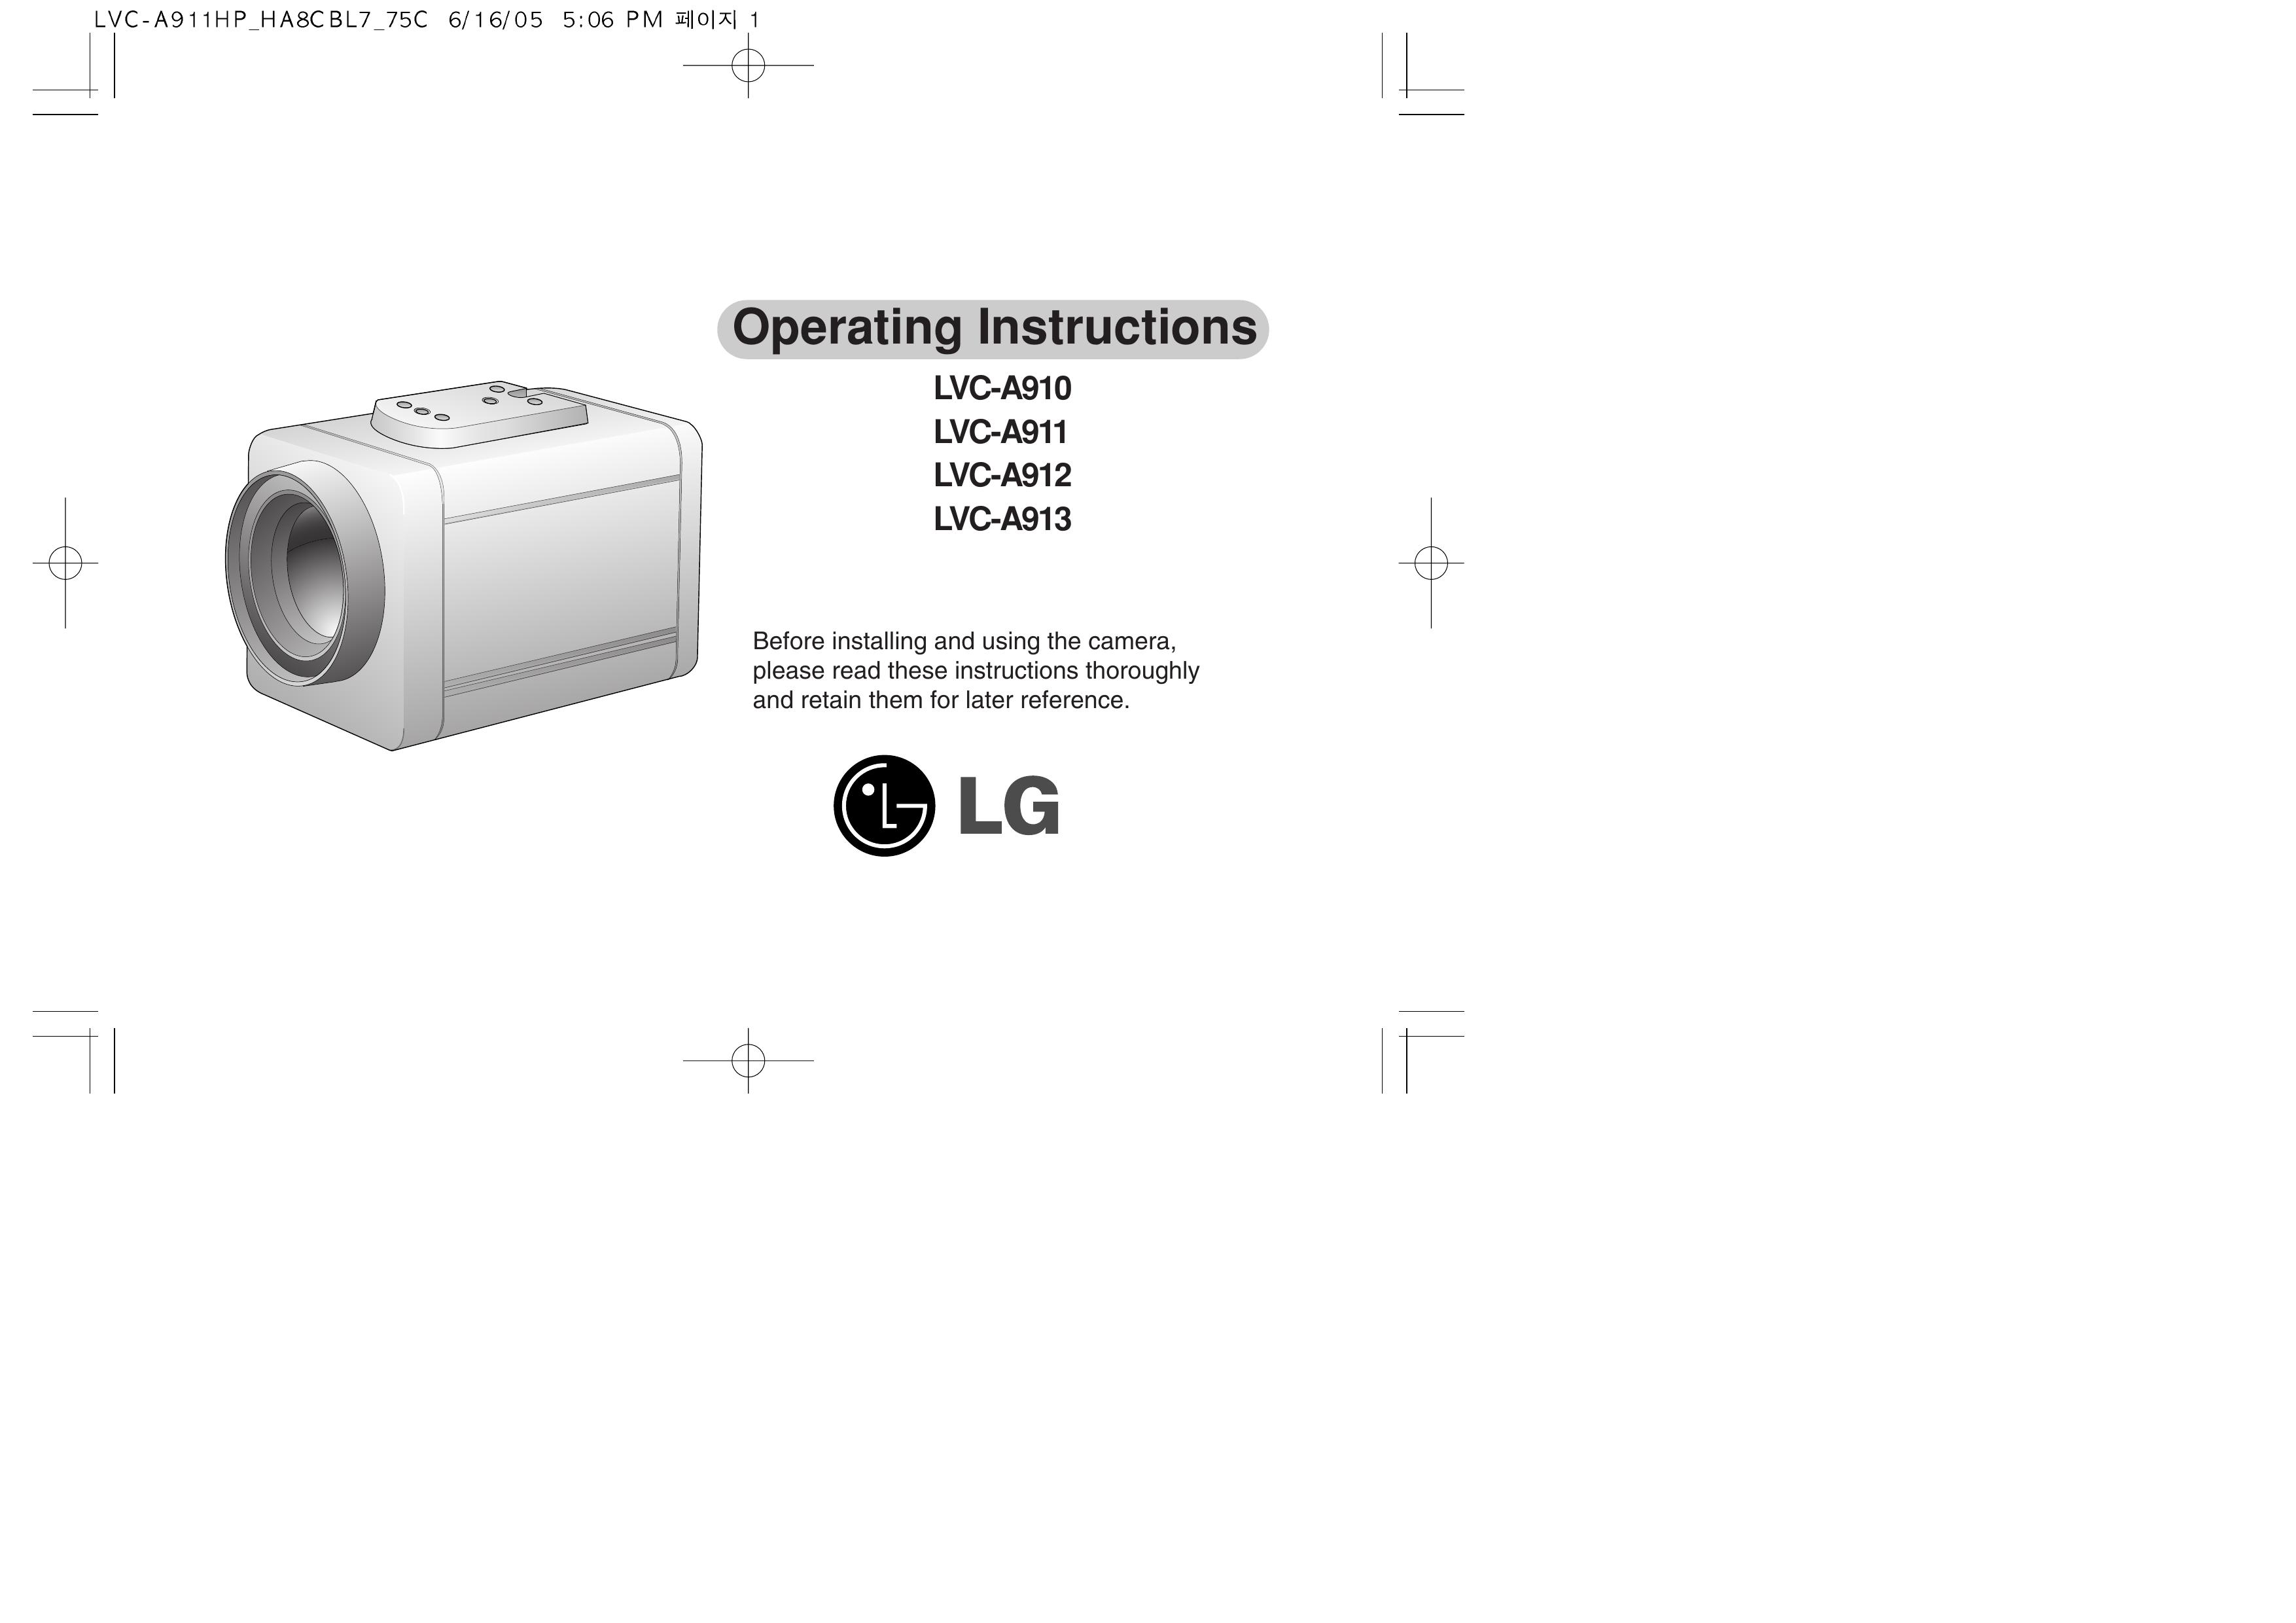 LG Electronics LVC-A912 Digital Camera User Manual